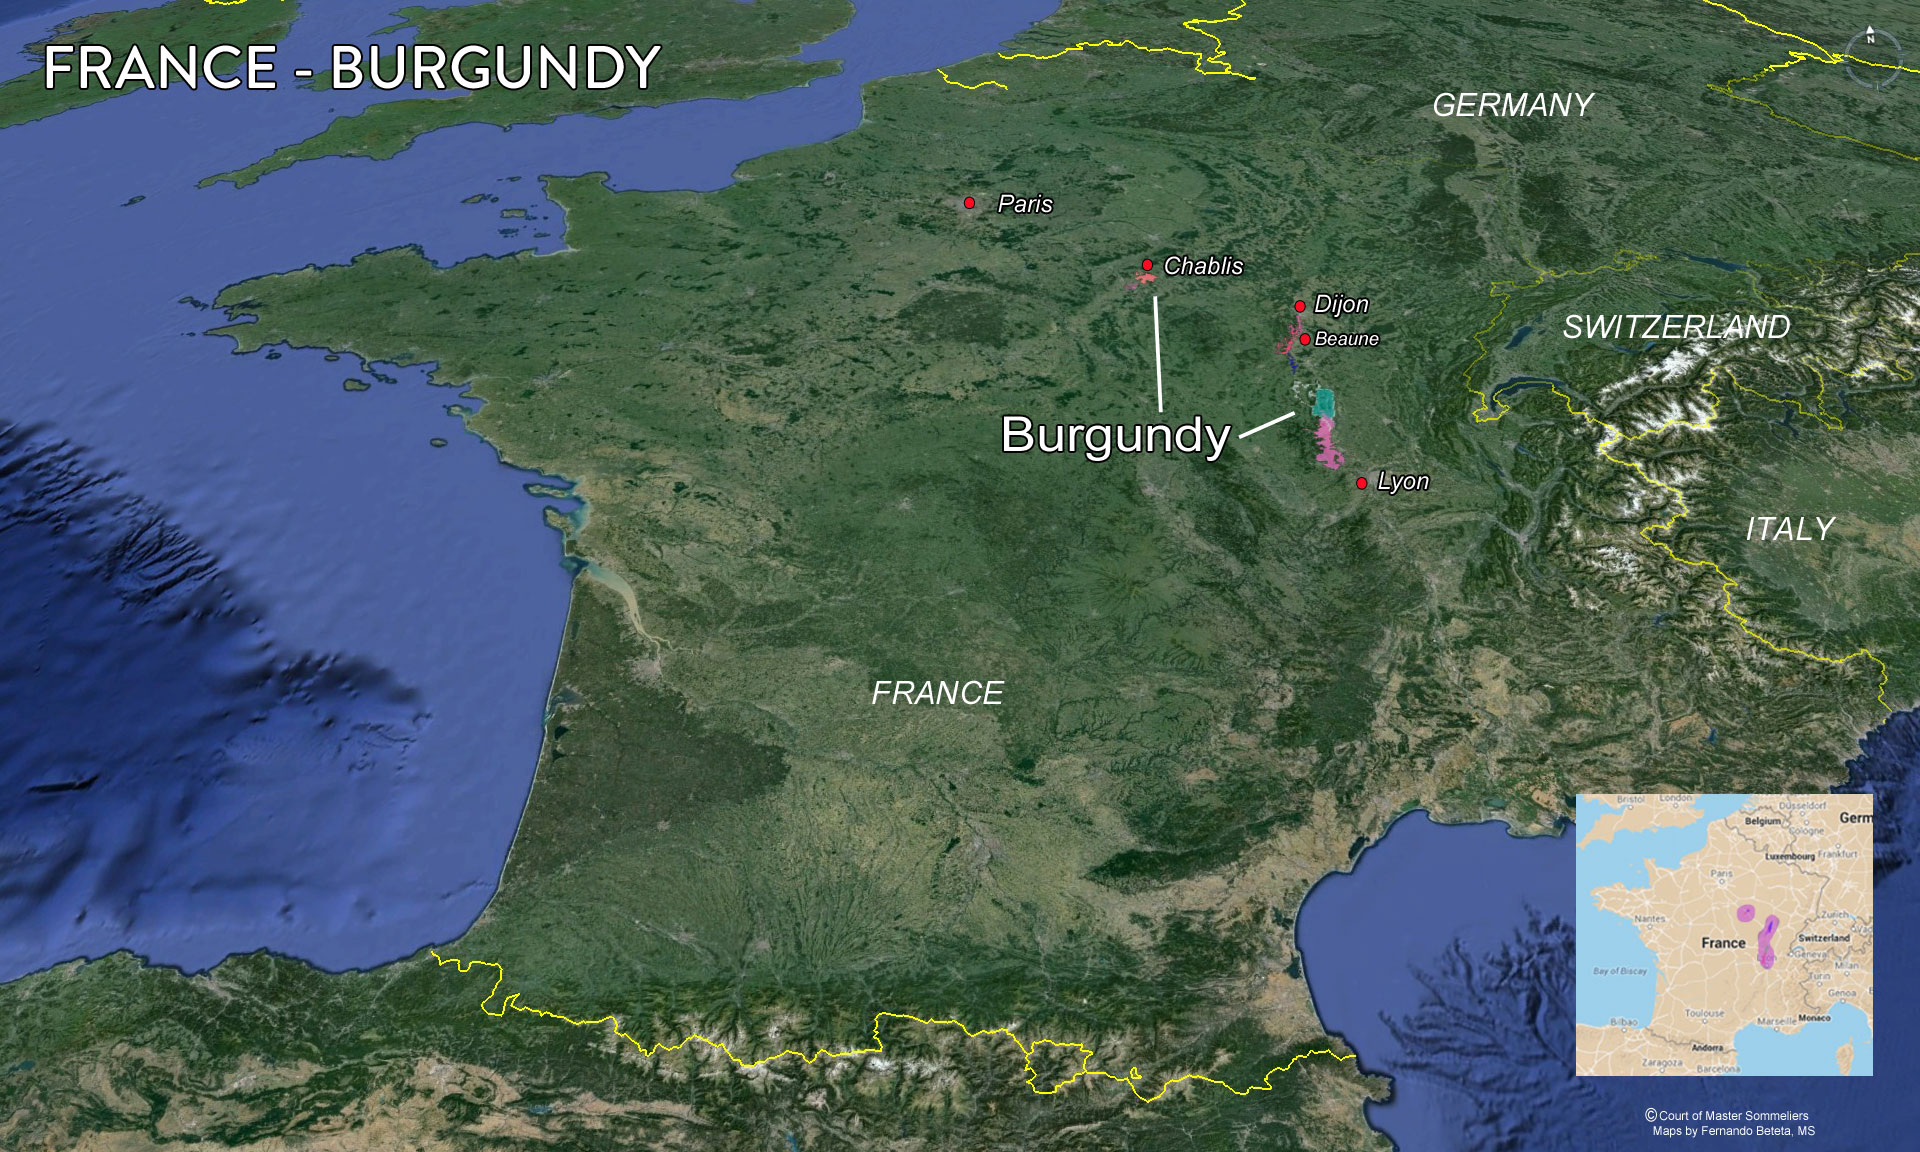 France-Burgundy-Overview.jpg